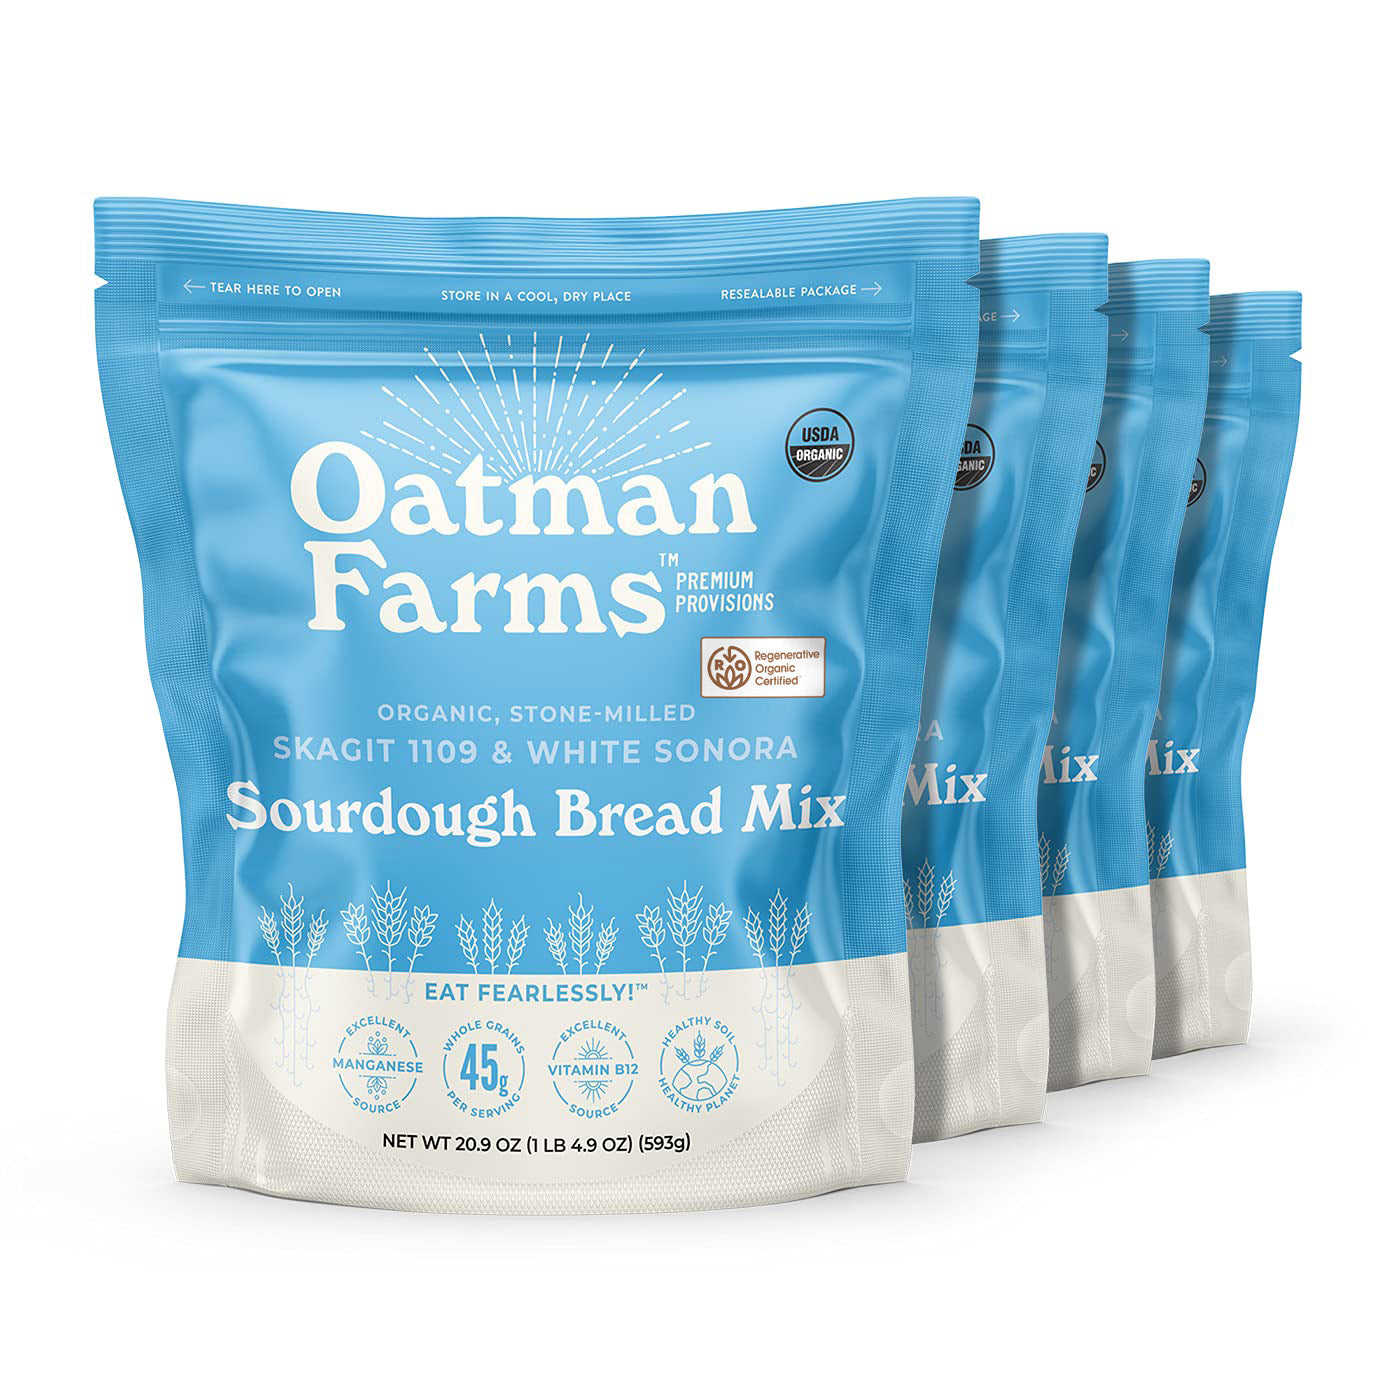 Oatman Farms Sourdough Bread Mix Skagit 1109 & White Sonora, 4 Pack